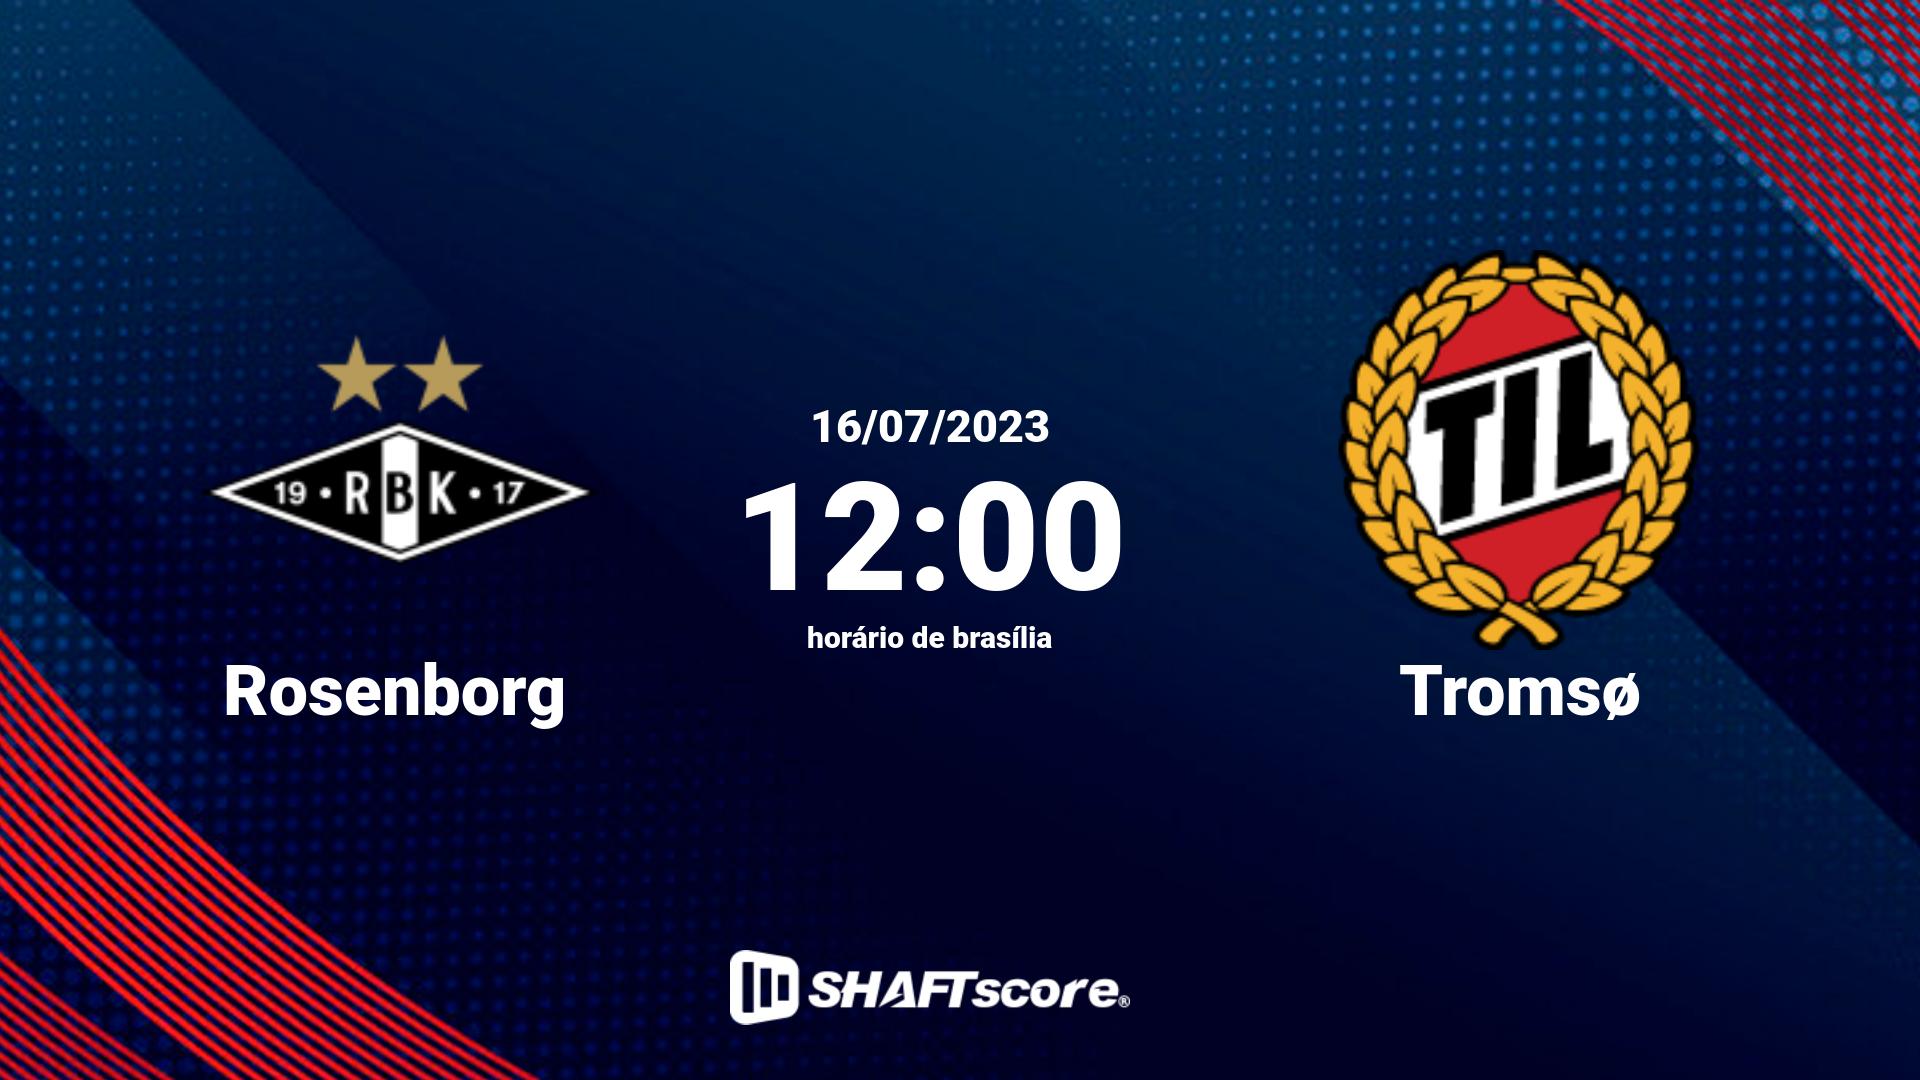 Estatísticas do jogo Rosenborg vs Tromsø 16.07 12:00